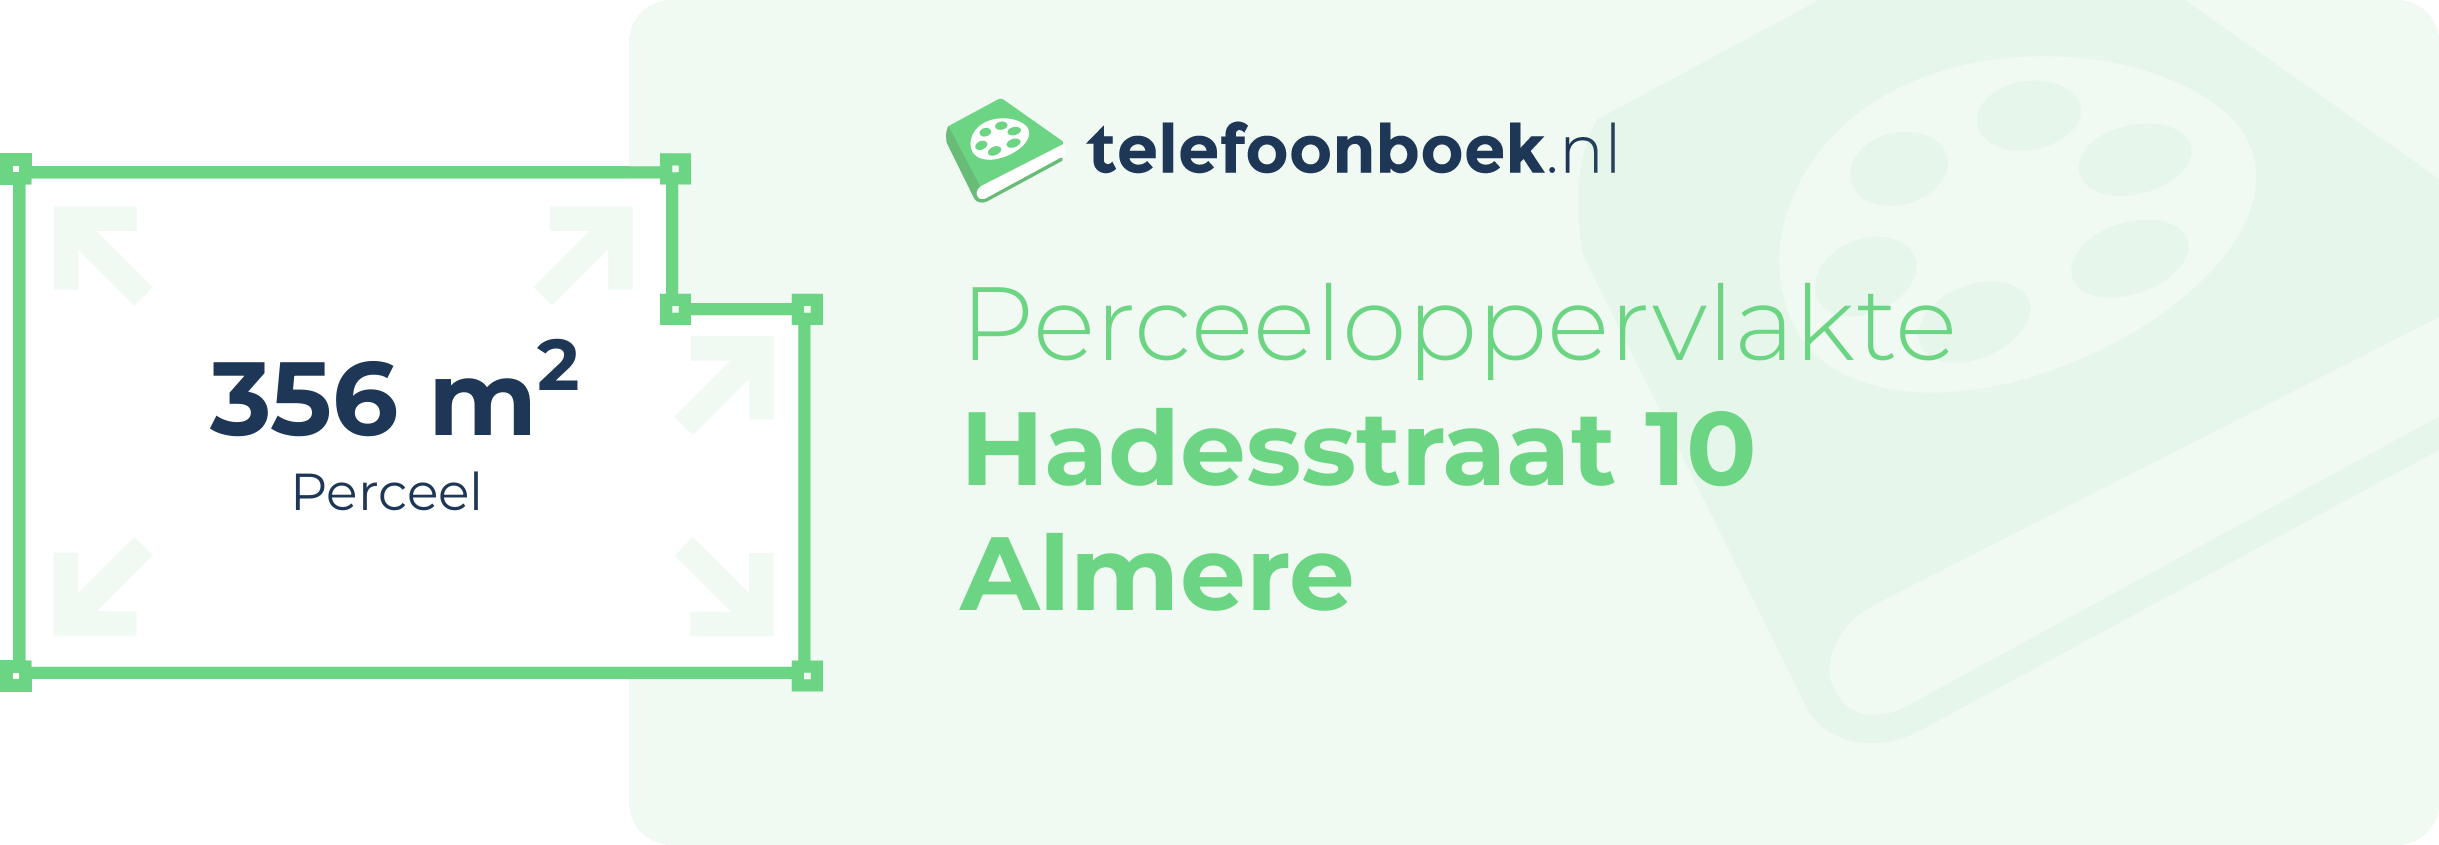 Perceeloppervlakte Hadesstraat 10 Almere